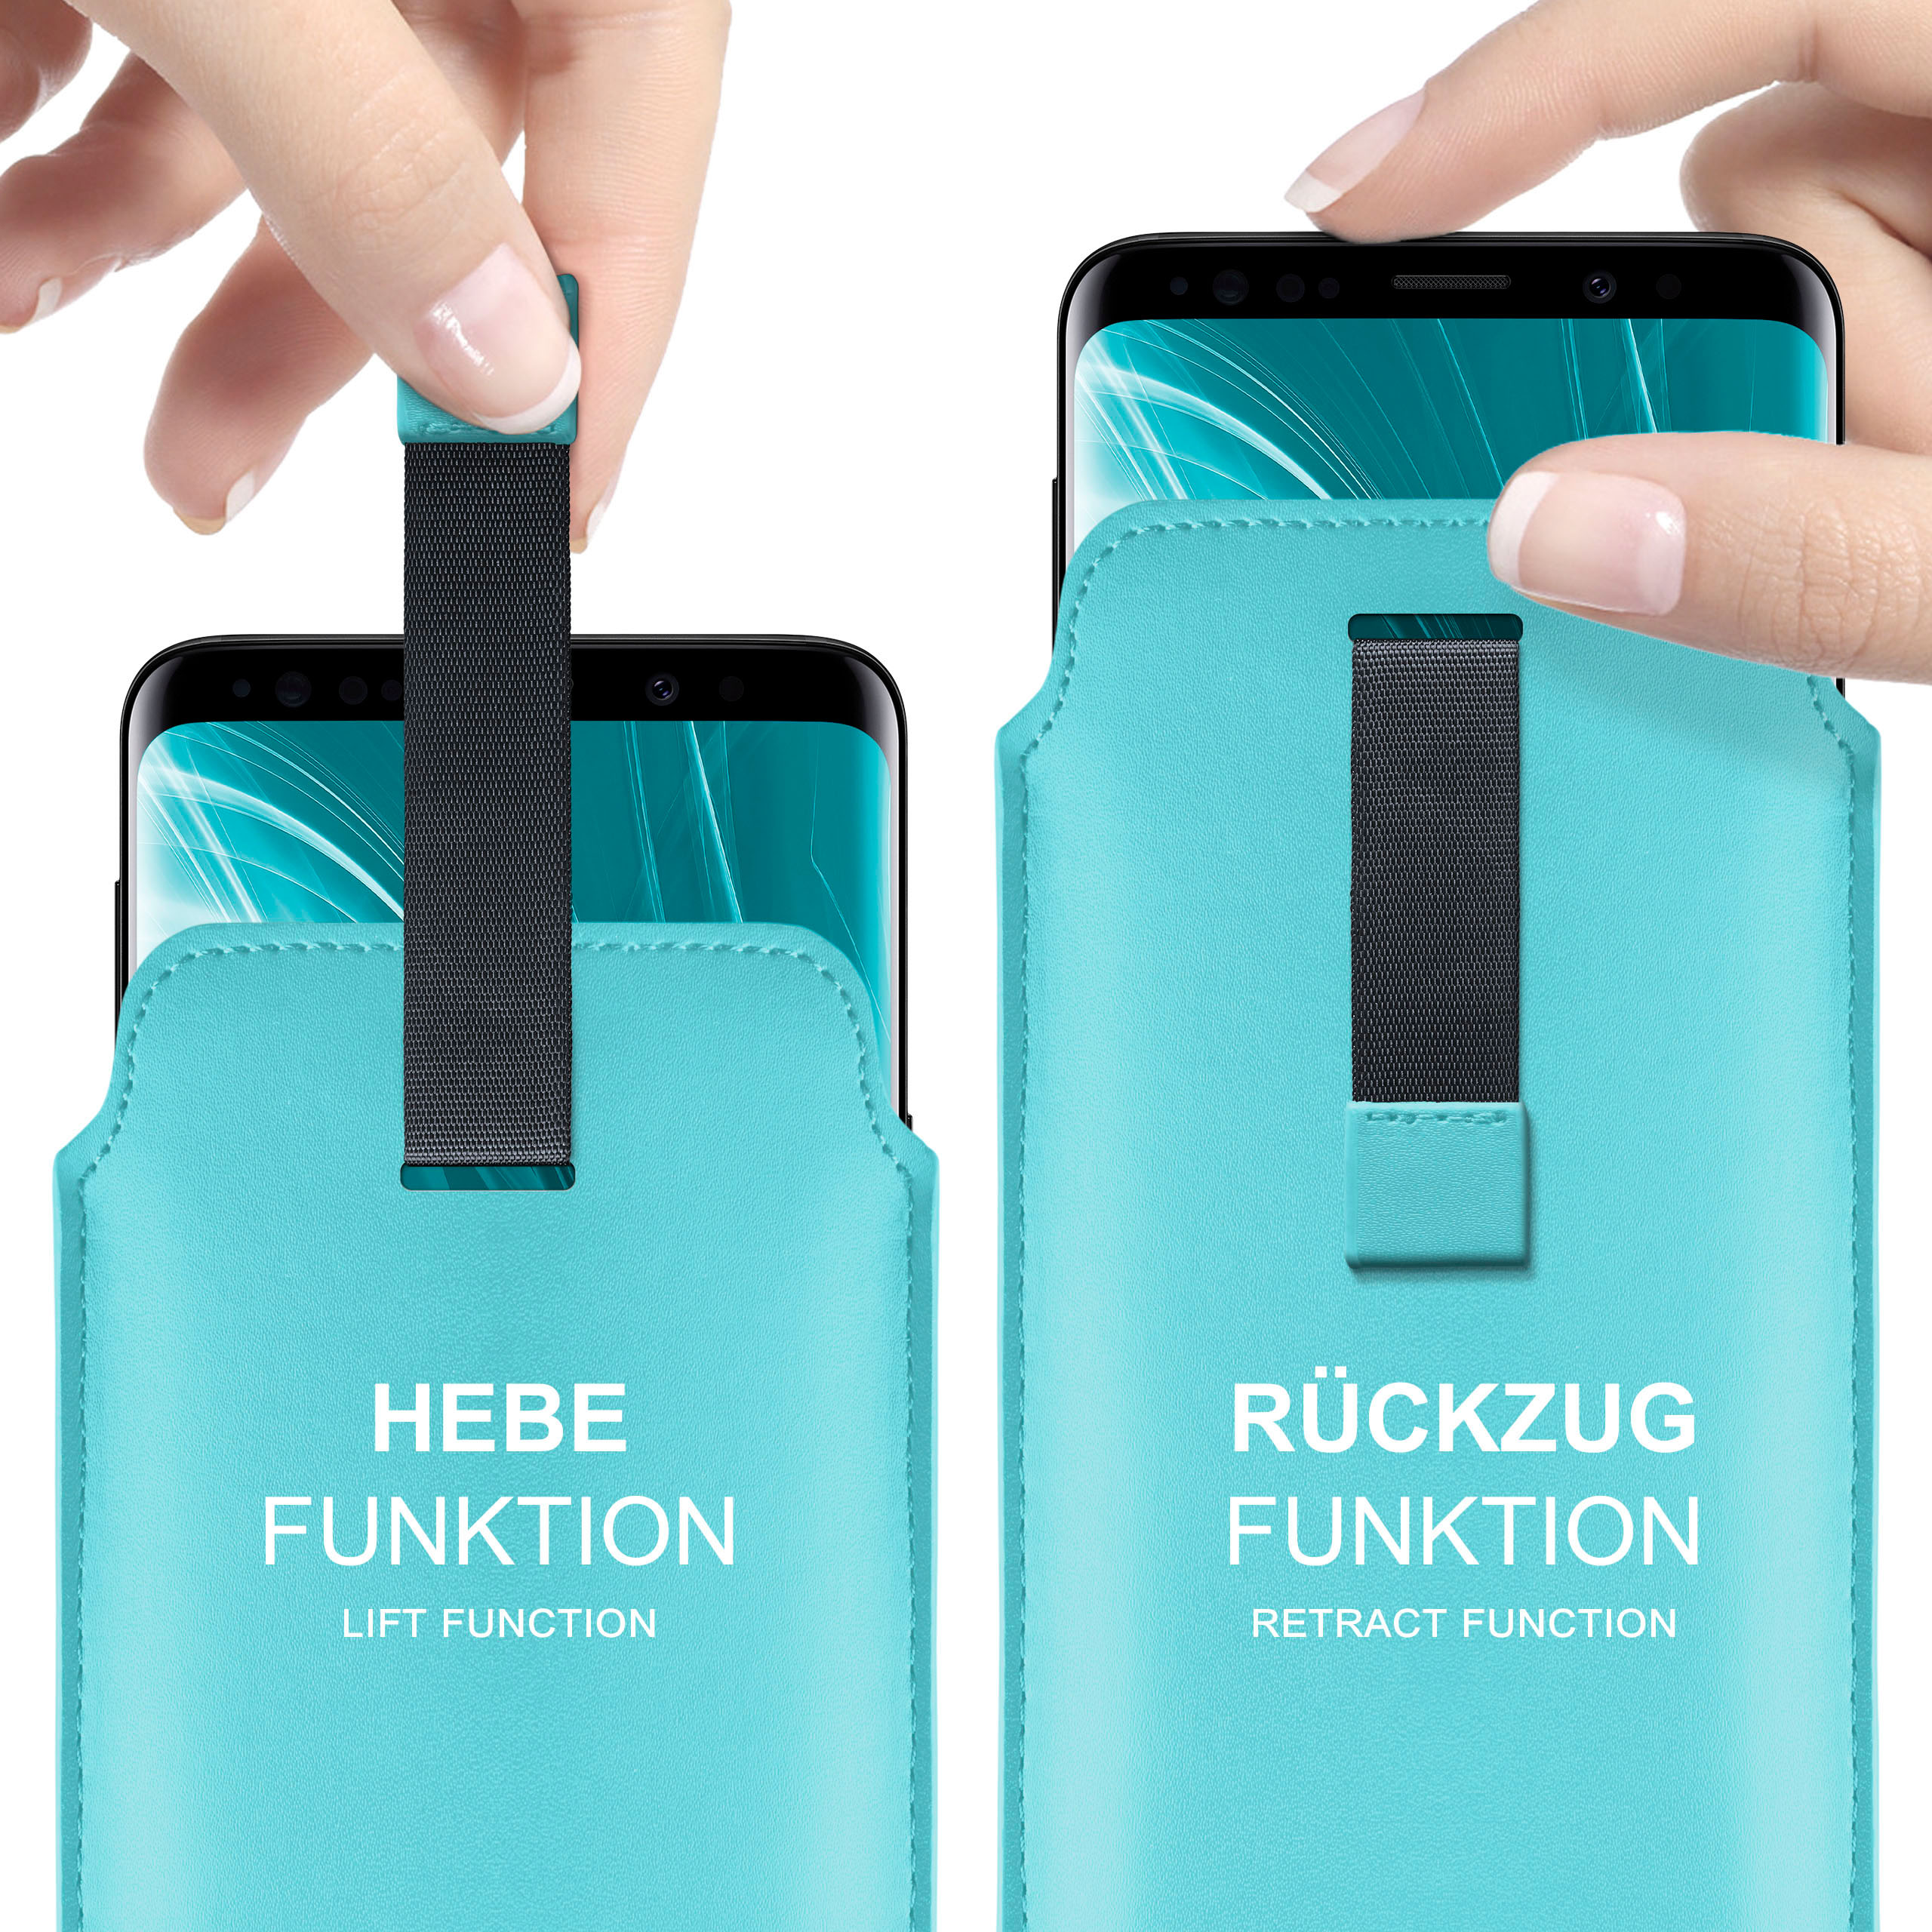 MOEX Slide 3T, Cover, OnePlus, Aqua-Cyan Full Case